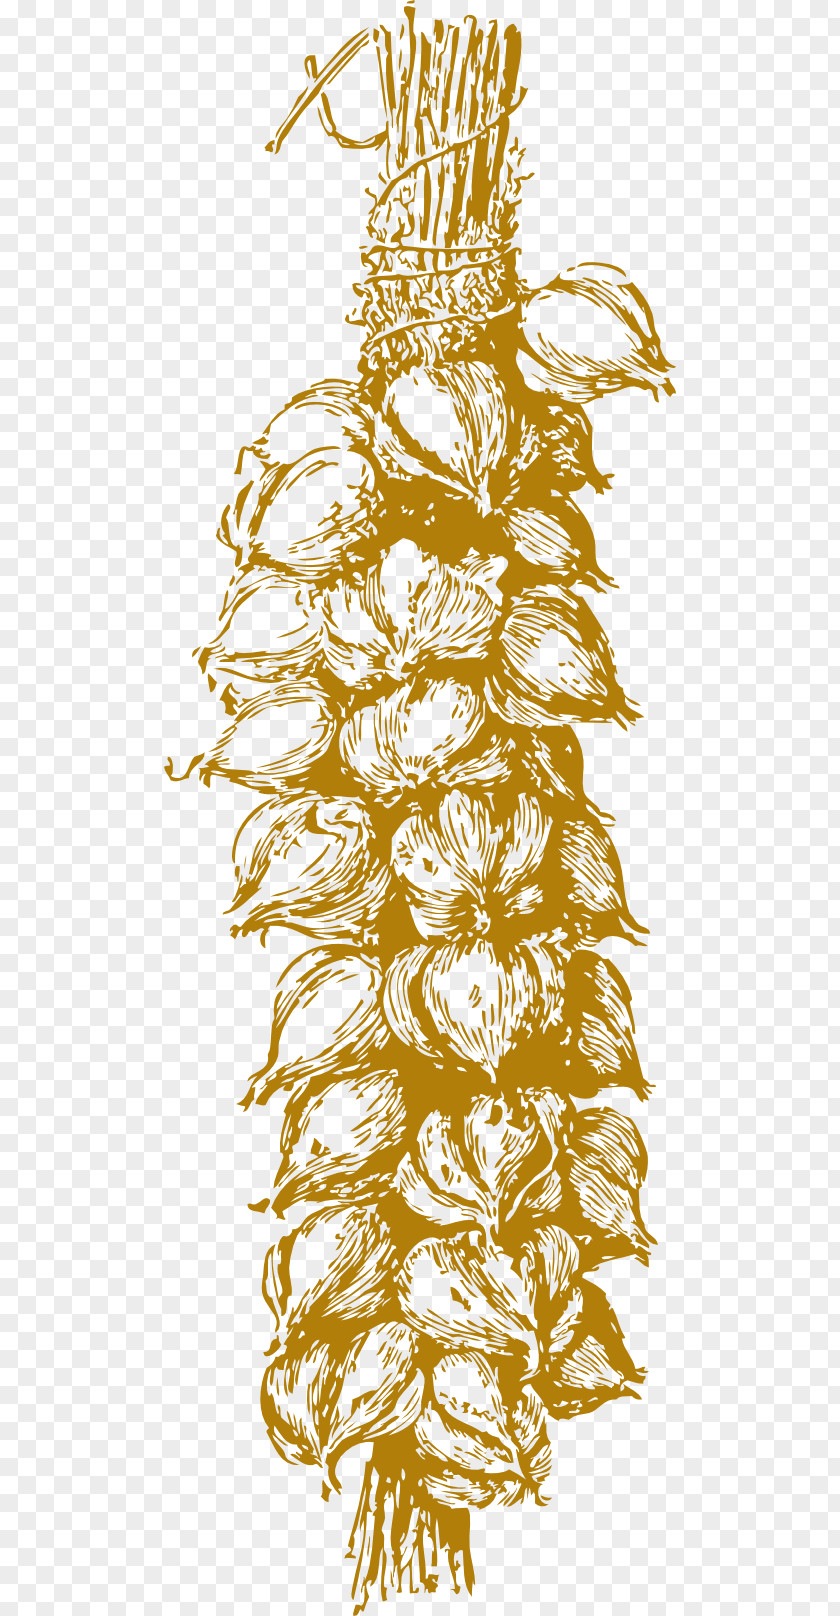 Garlic Bread Clove PNG